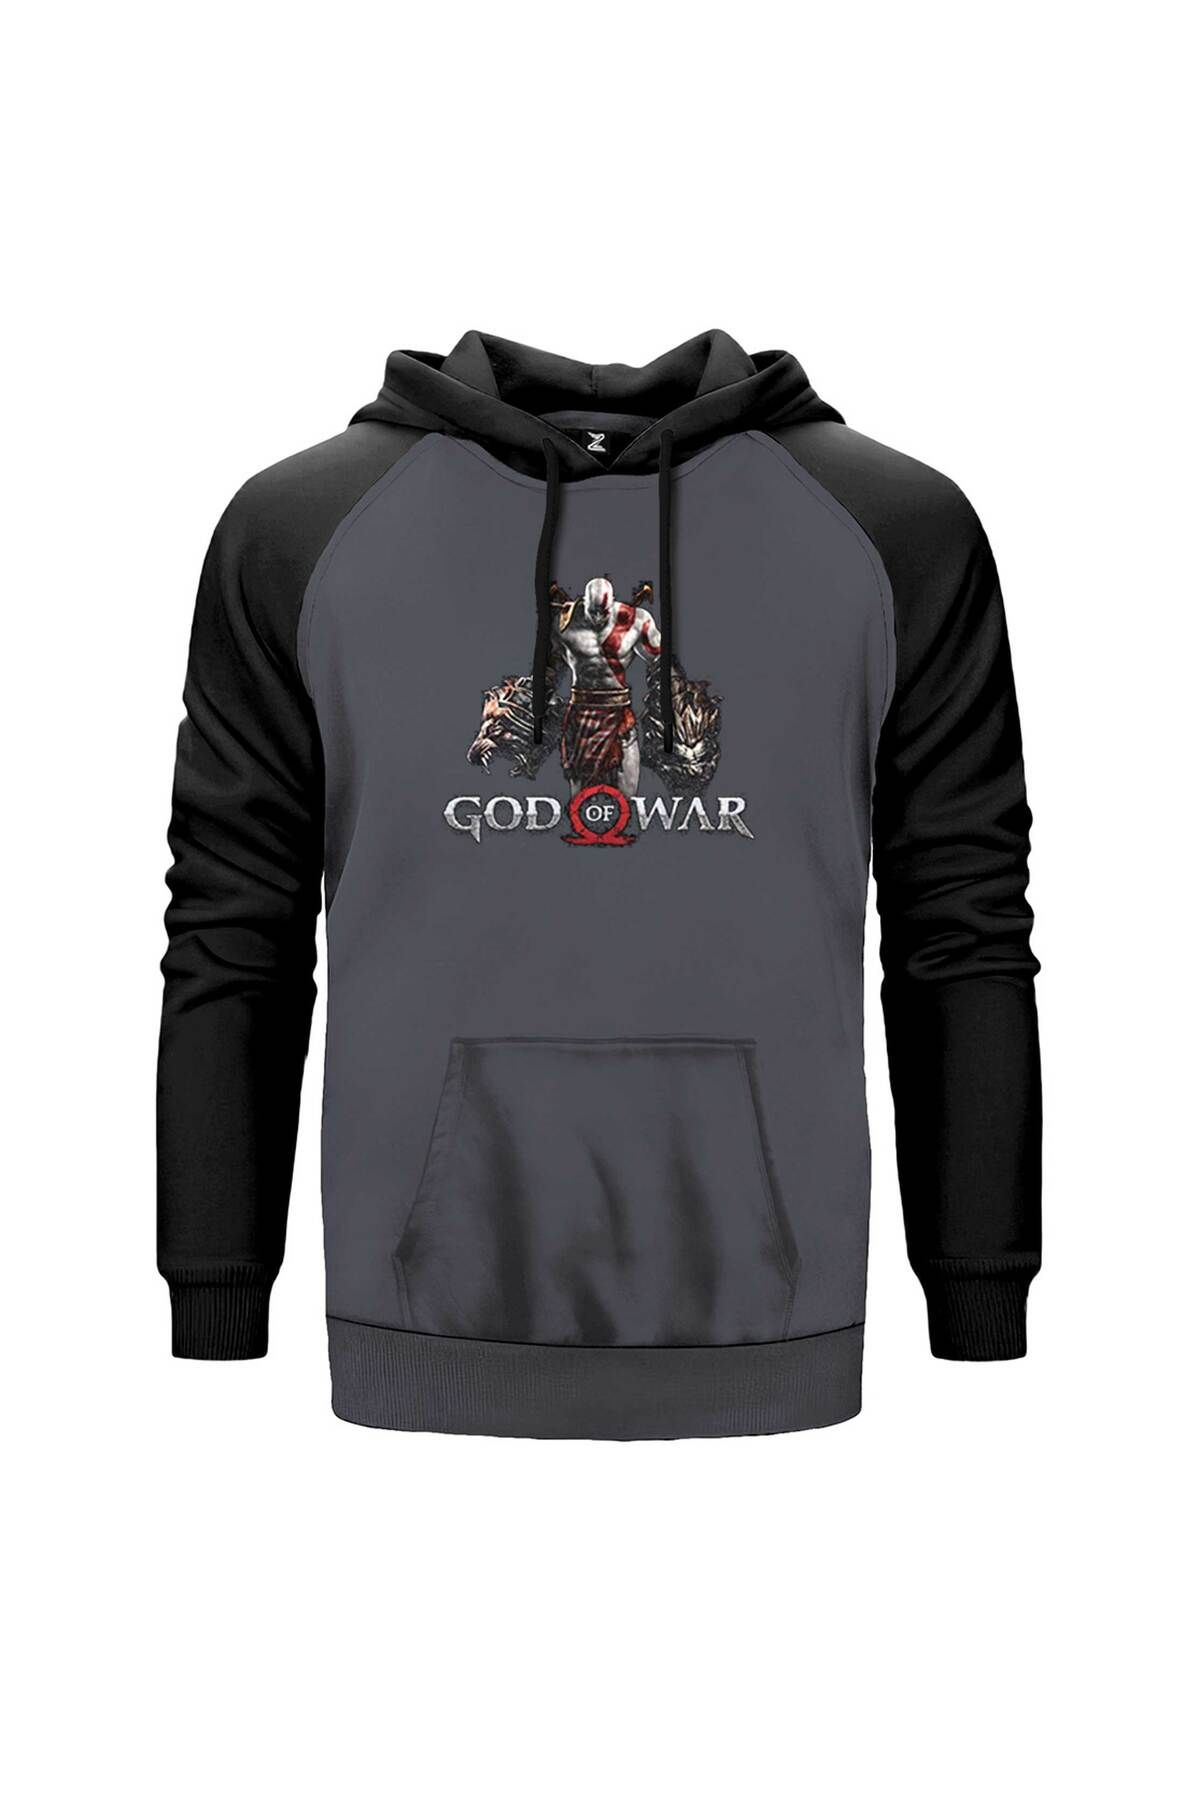 Z zepplin God Of War Kratos Lion Gri Renk Reglan Kol Sweatshirt